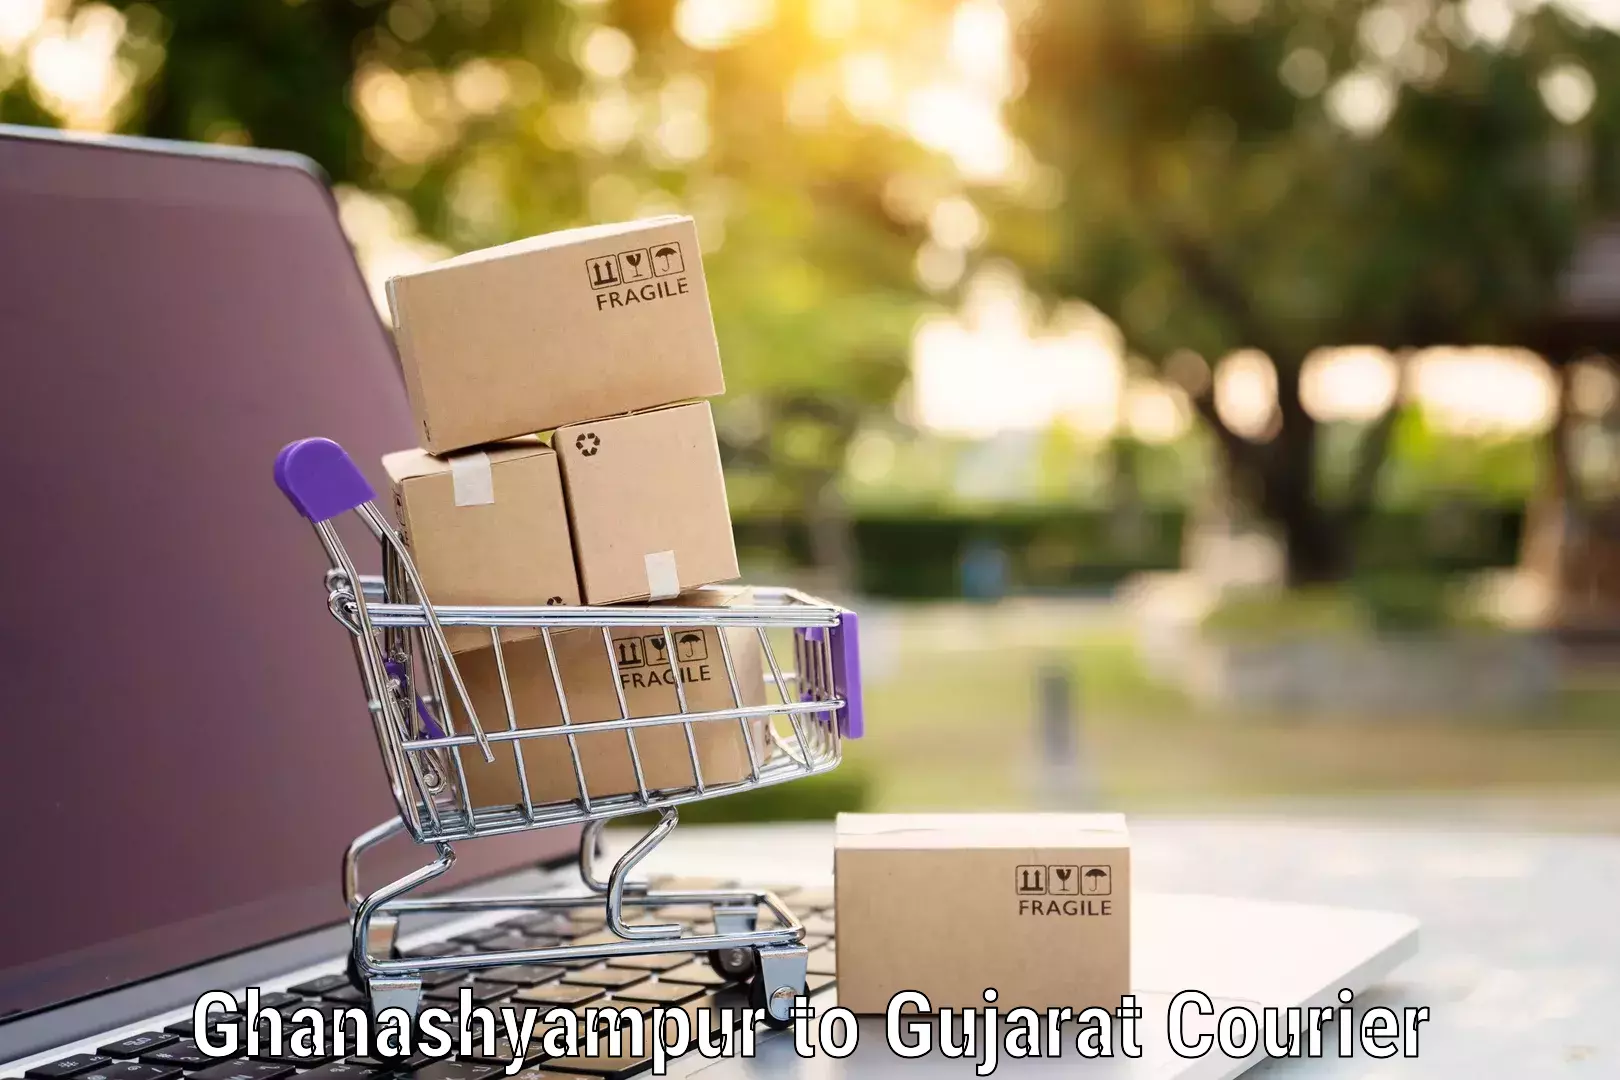 Professional moving company Ghanashyampur to Gujarat